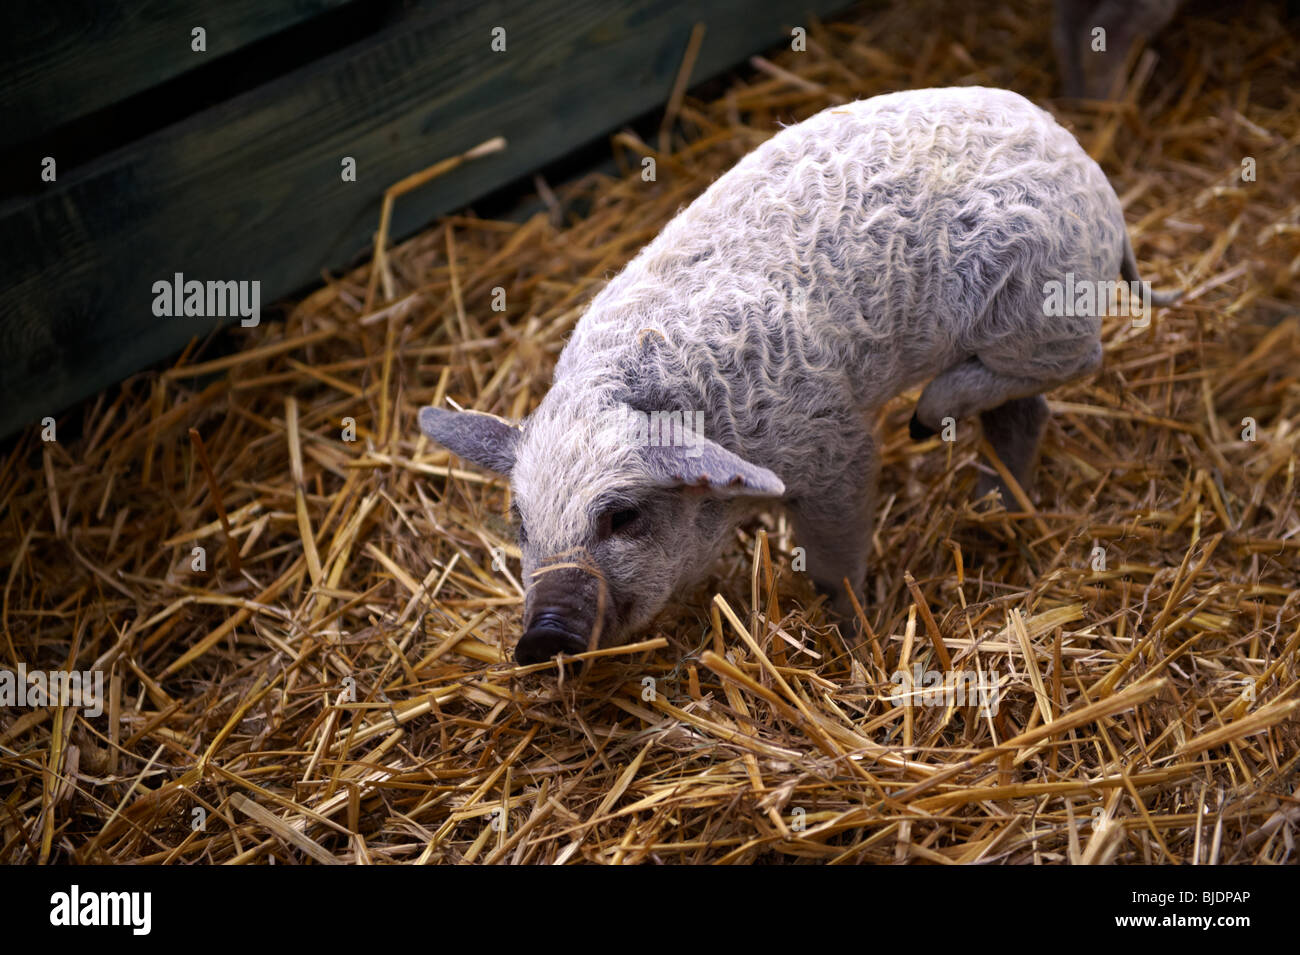 Mangalcsa piglets, Hungary stock photos Stock Photo